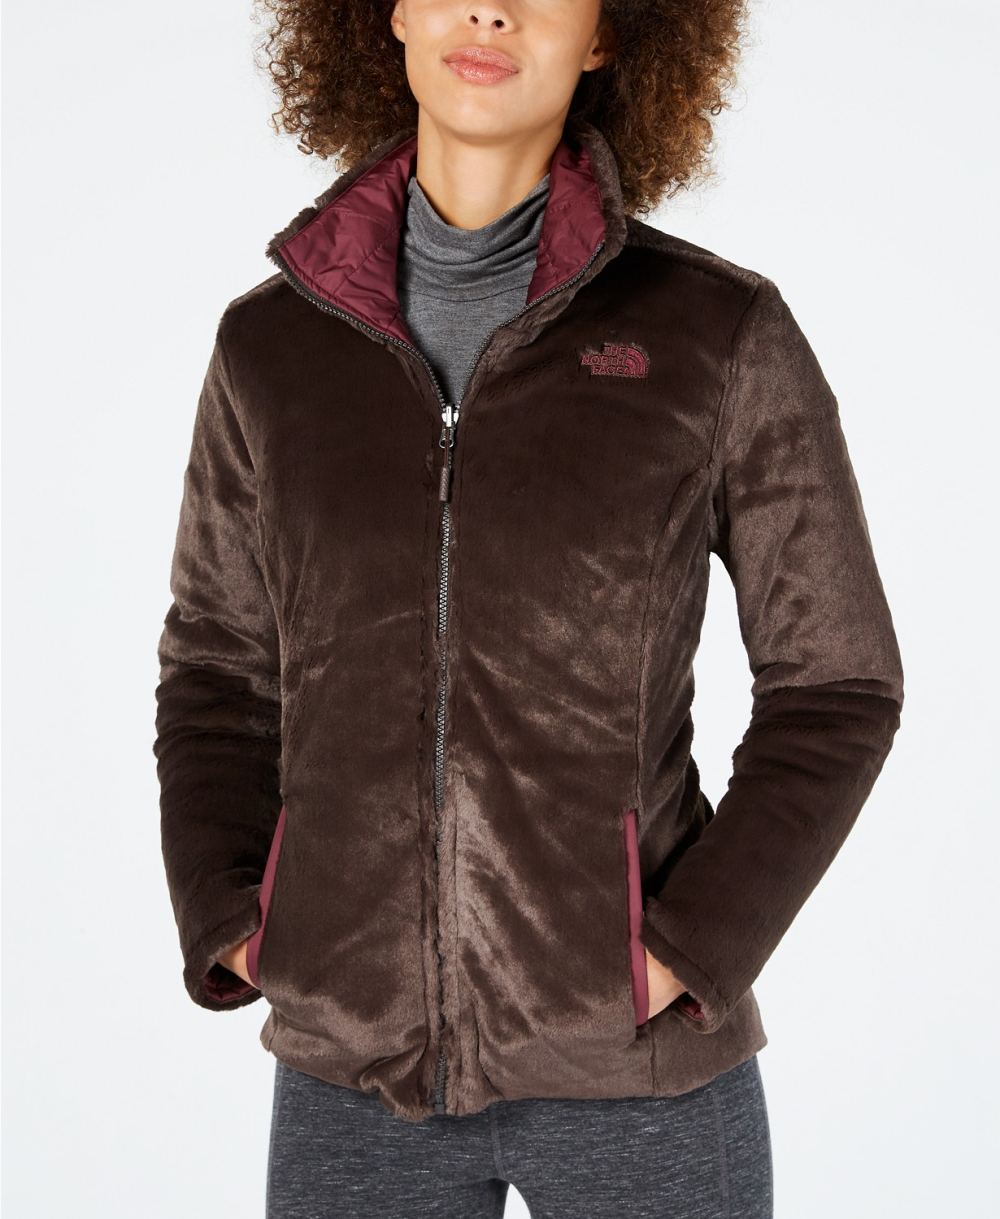 north face jacket fleece reversible sale macys